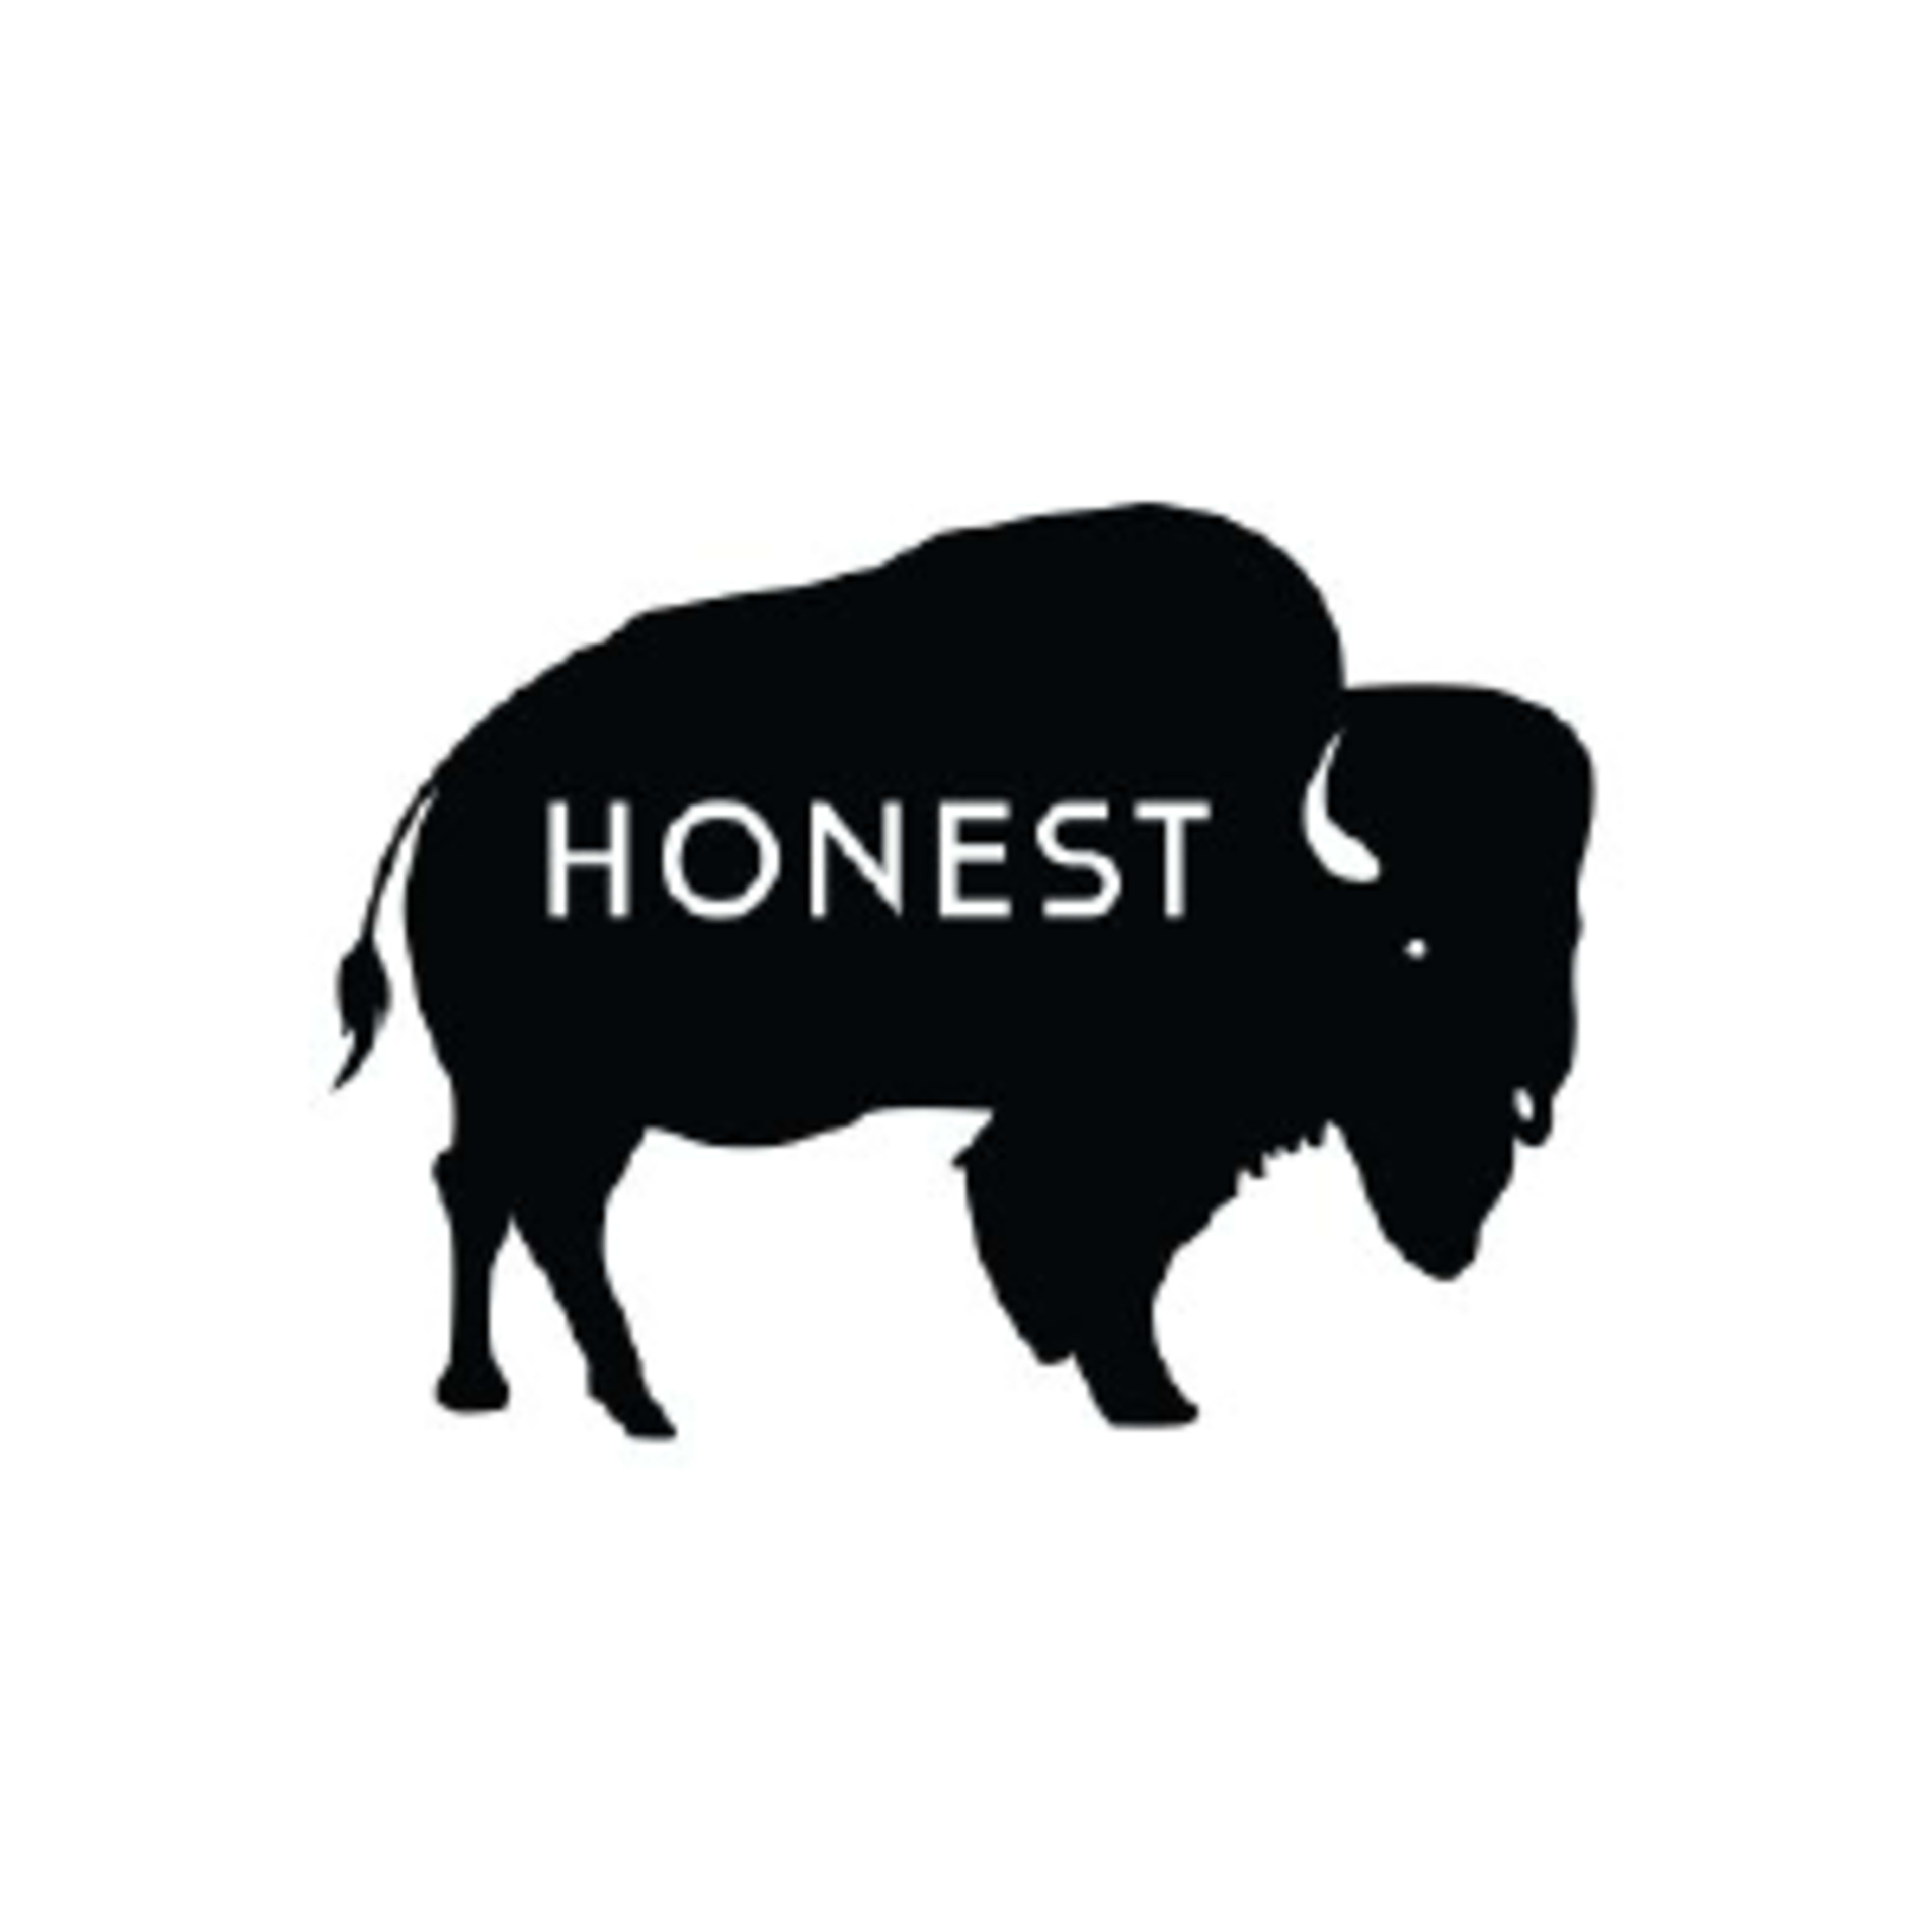 The Honest BisonCode